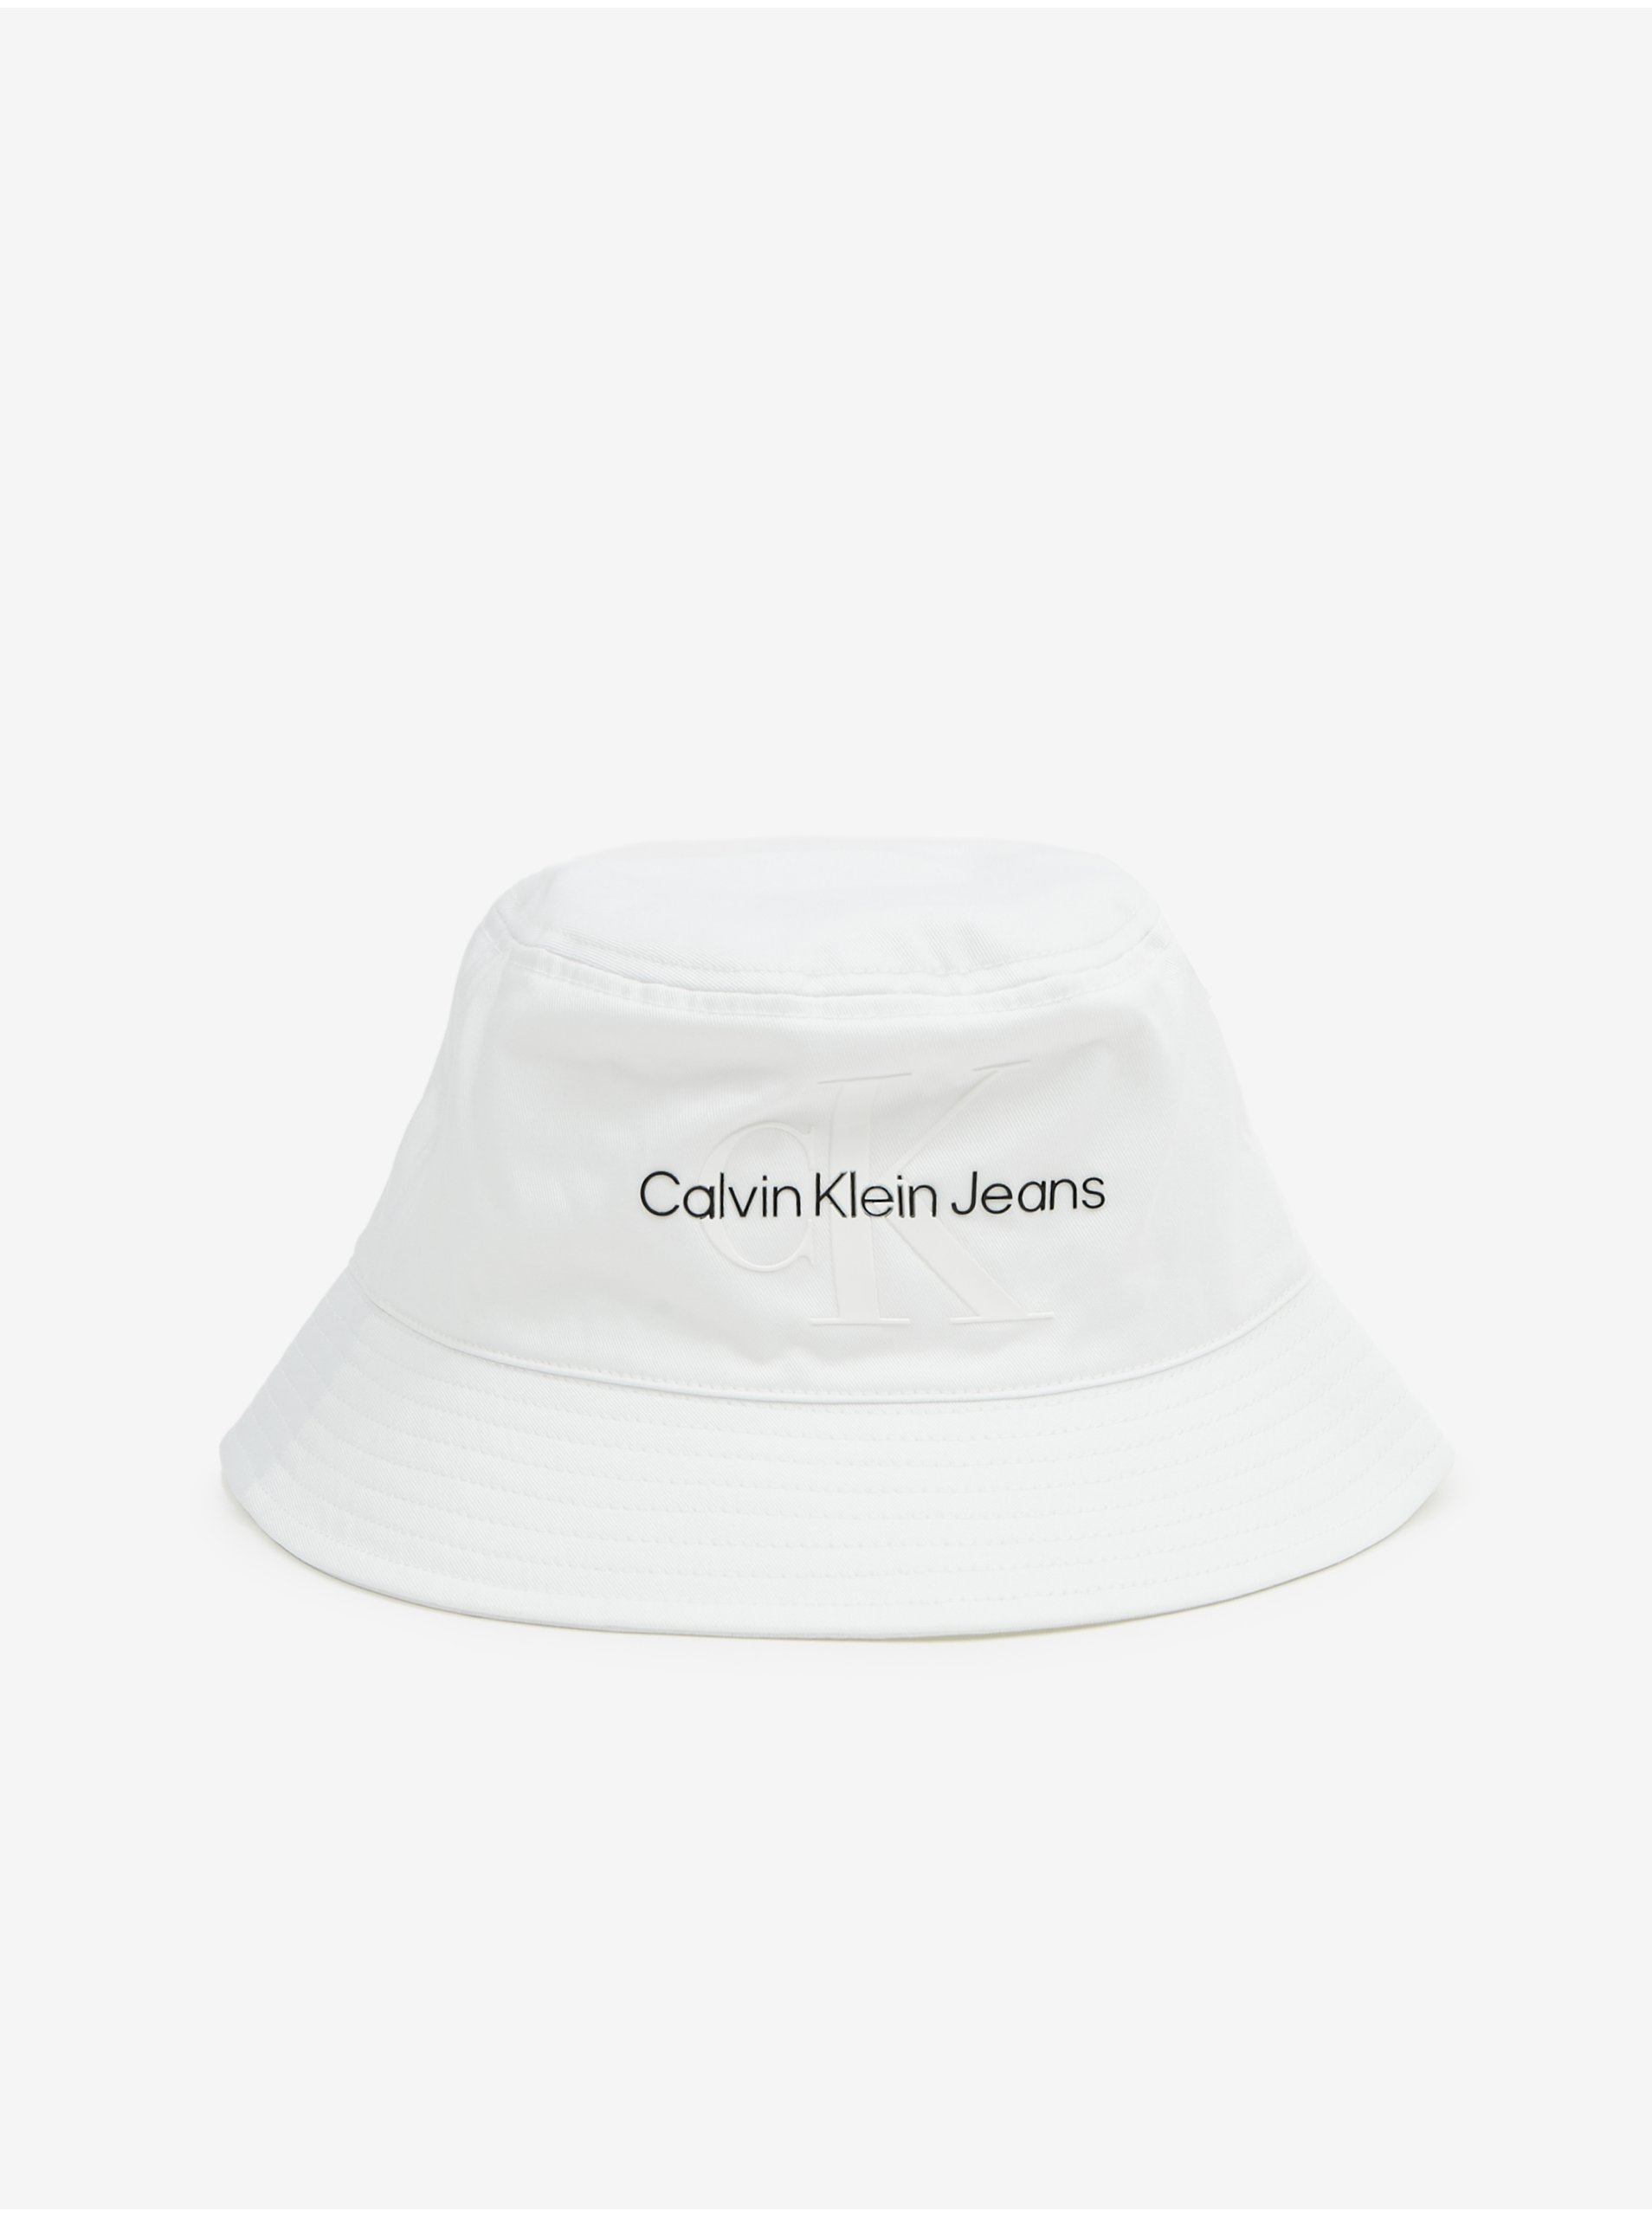 Lacno Biely dámsky klobúk Calvin Klein Jeans